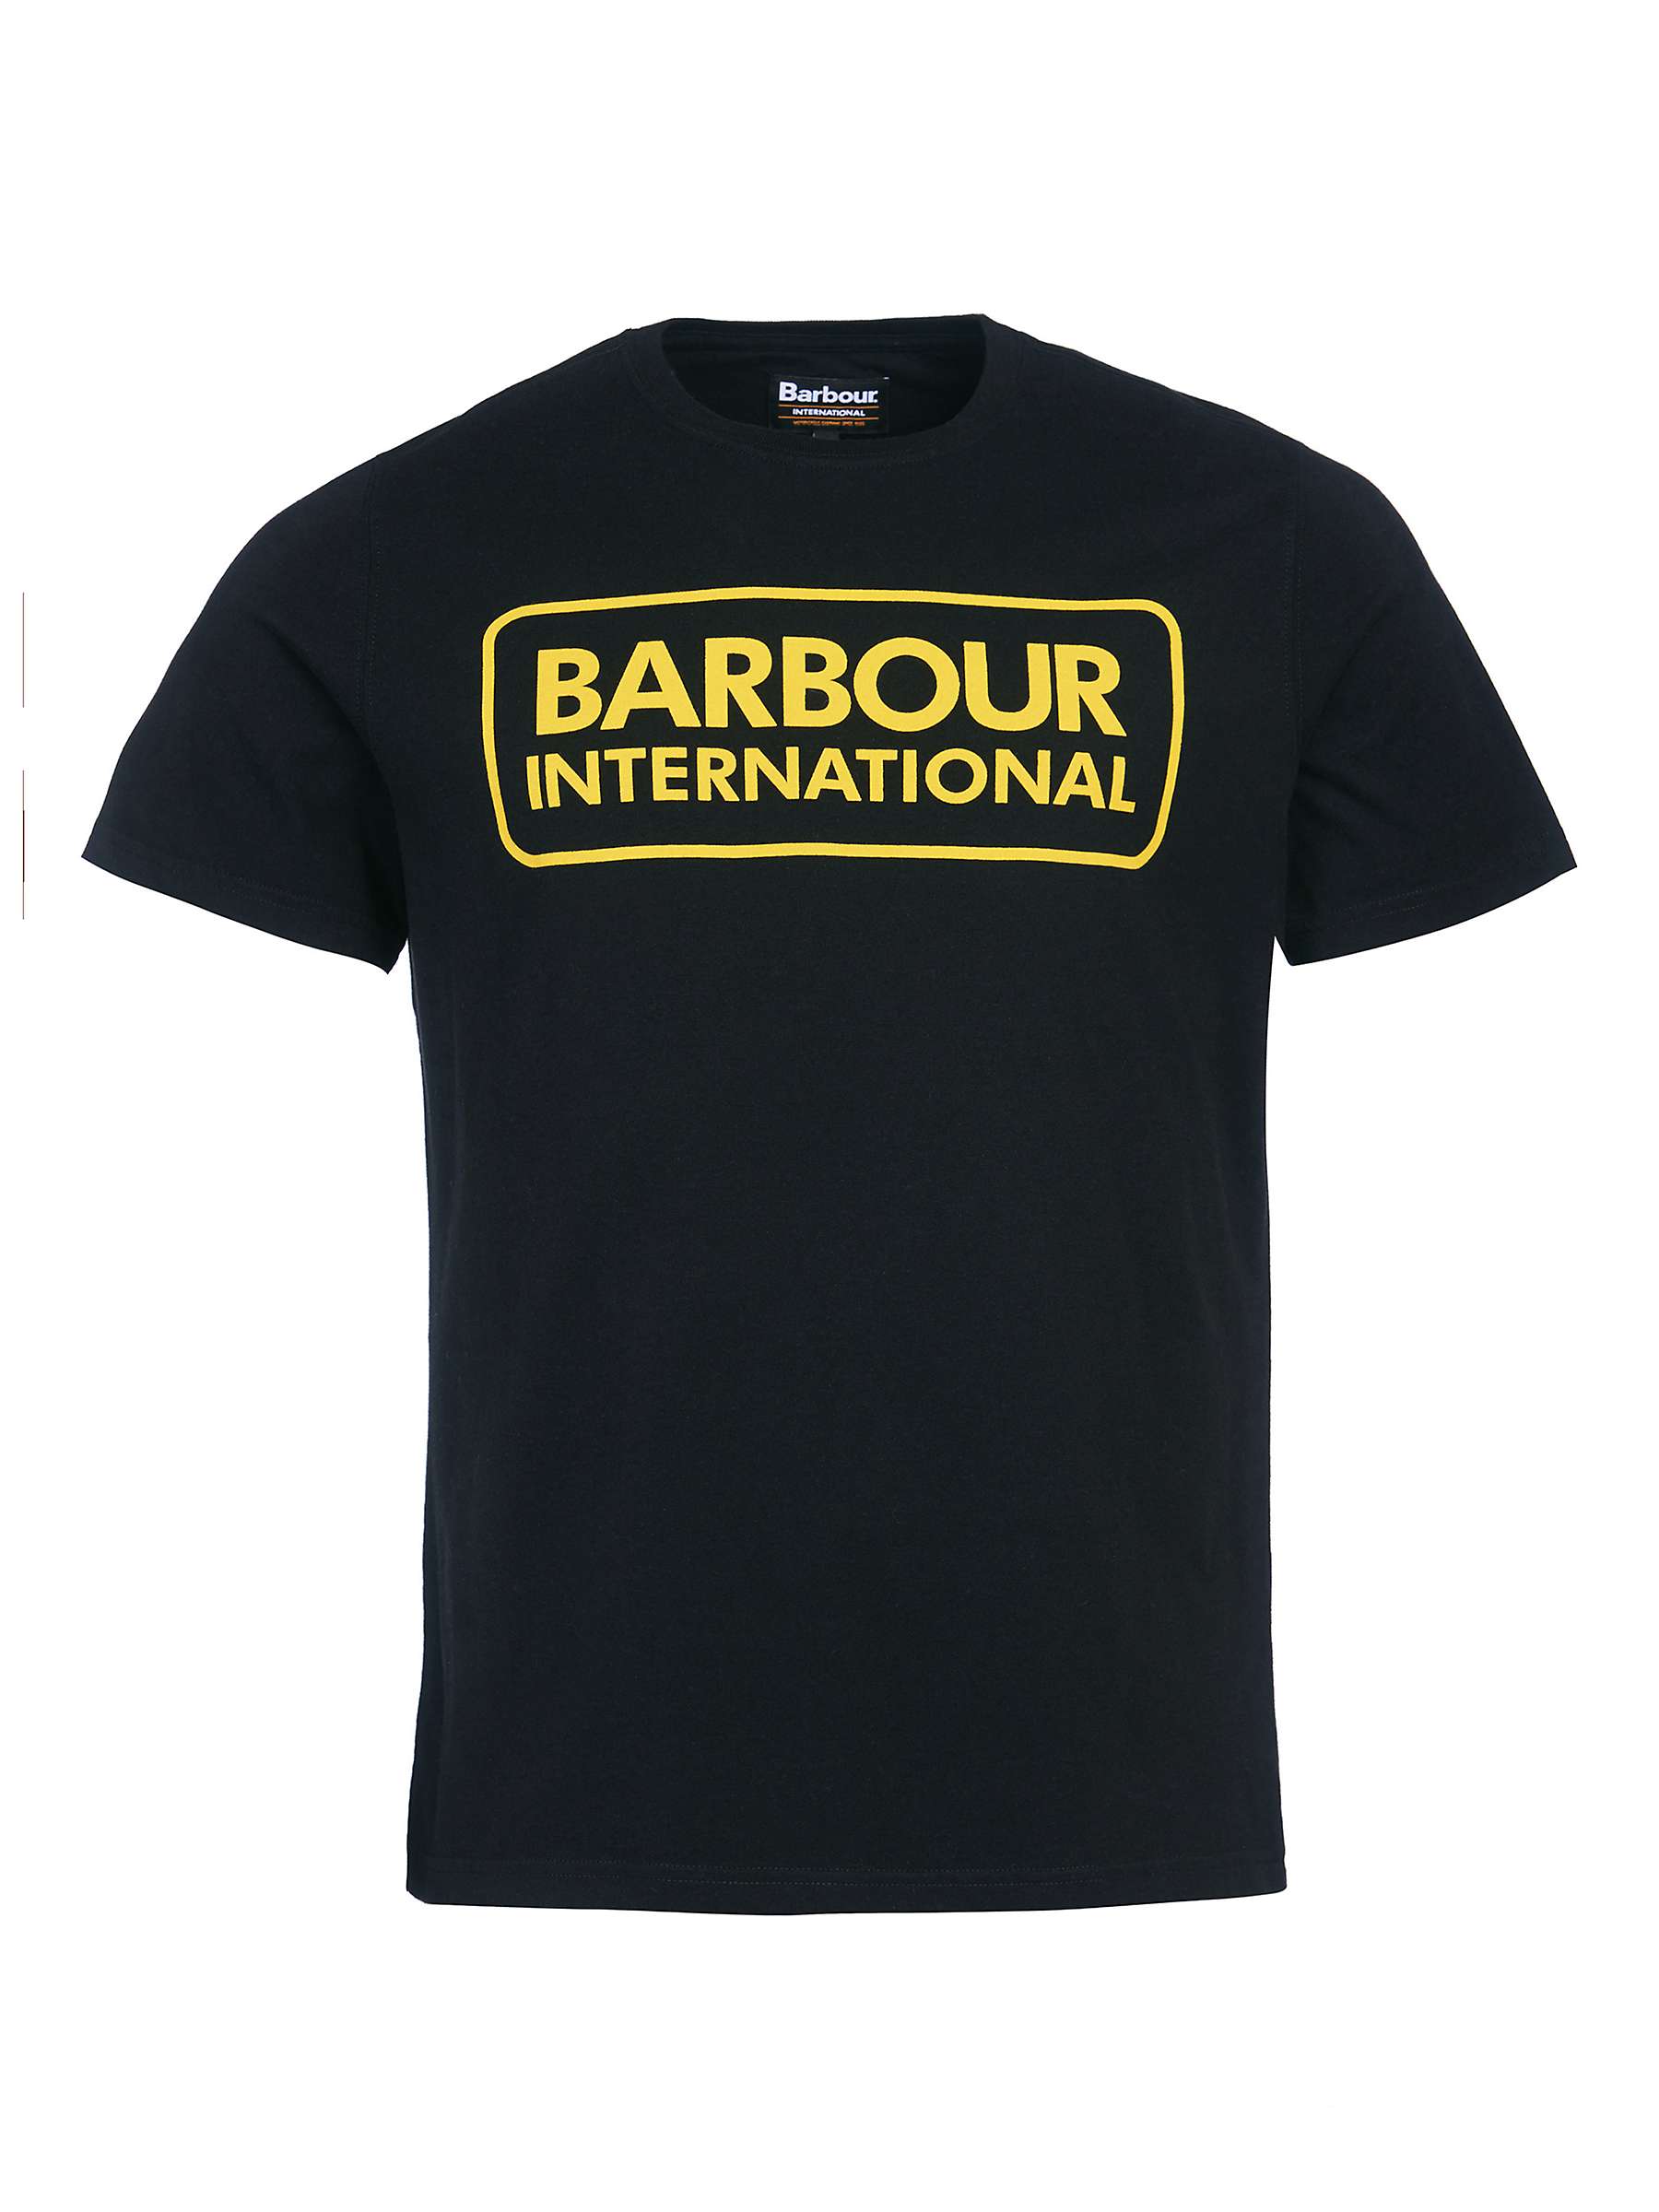 Buy Barbour International Cotton Crew Neck T-Shirt, Black Online at johnlewis.com